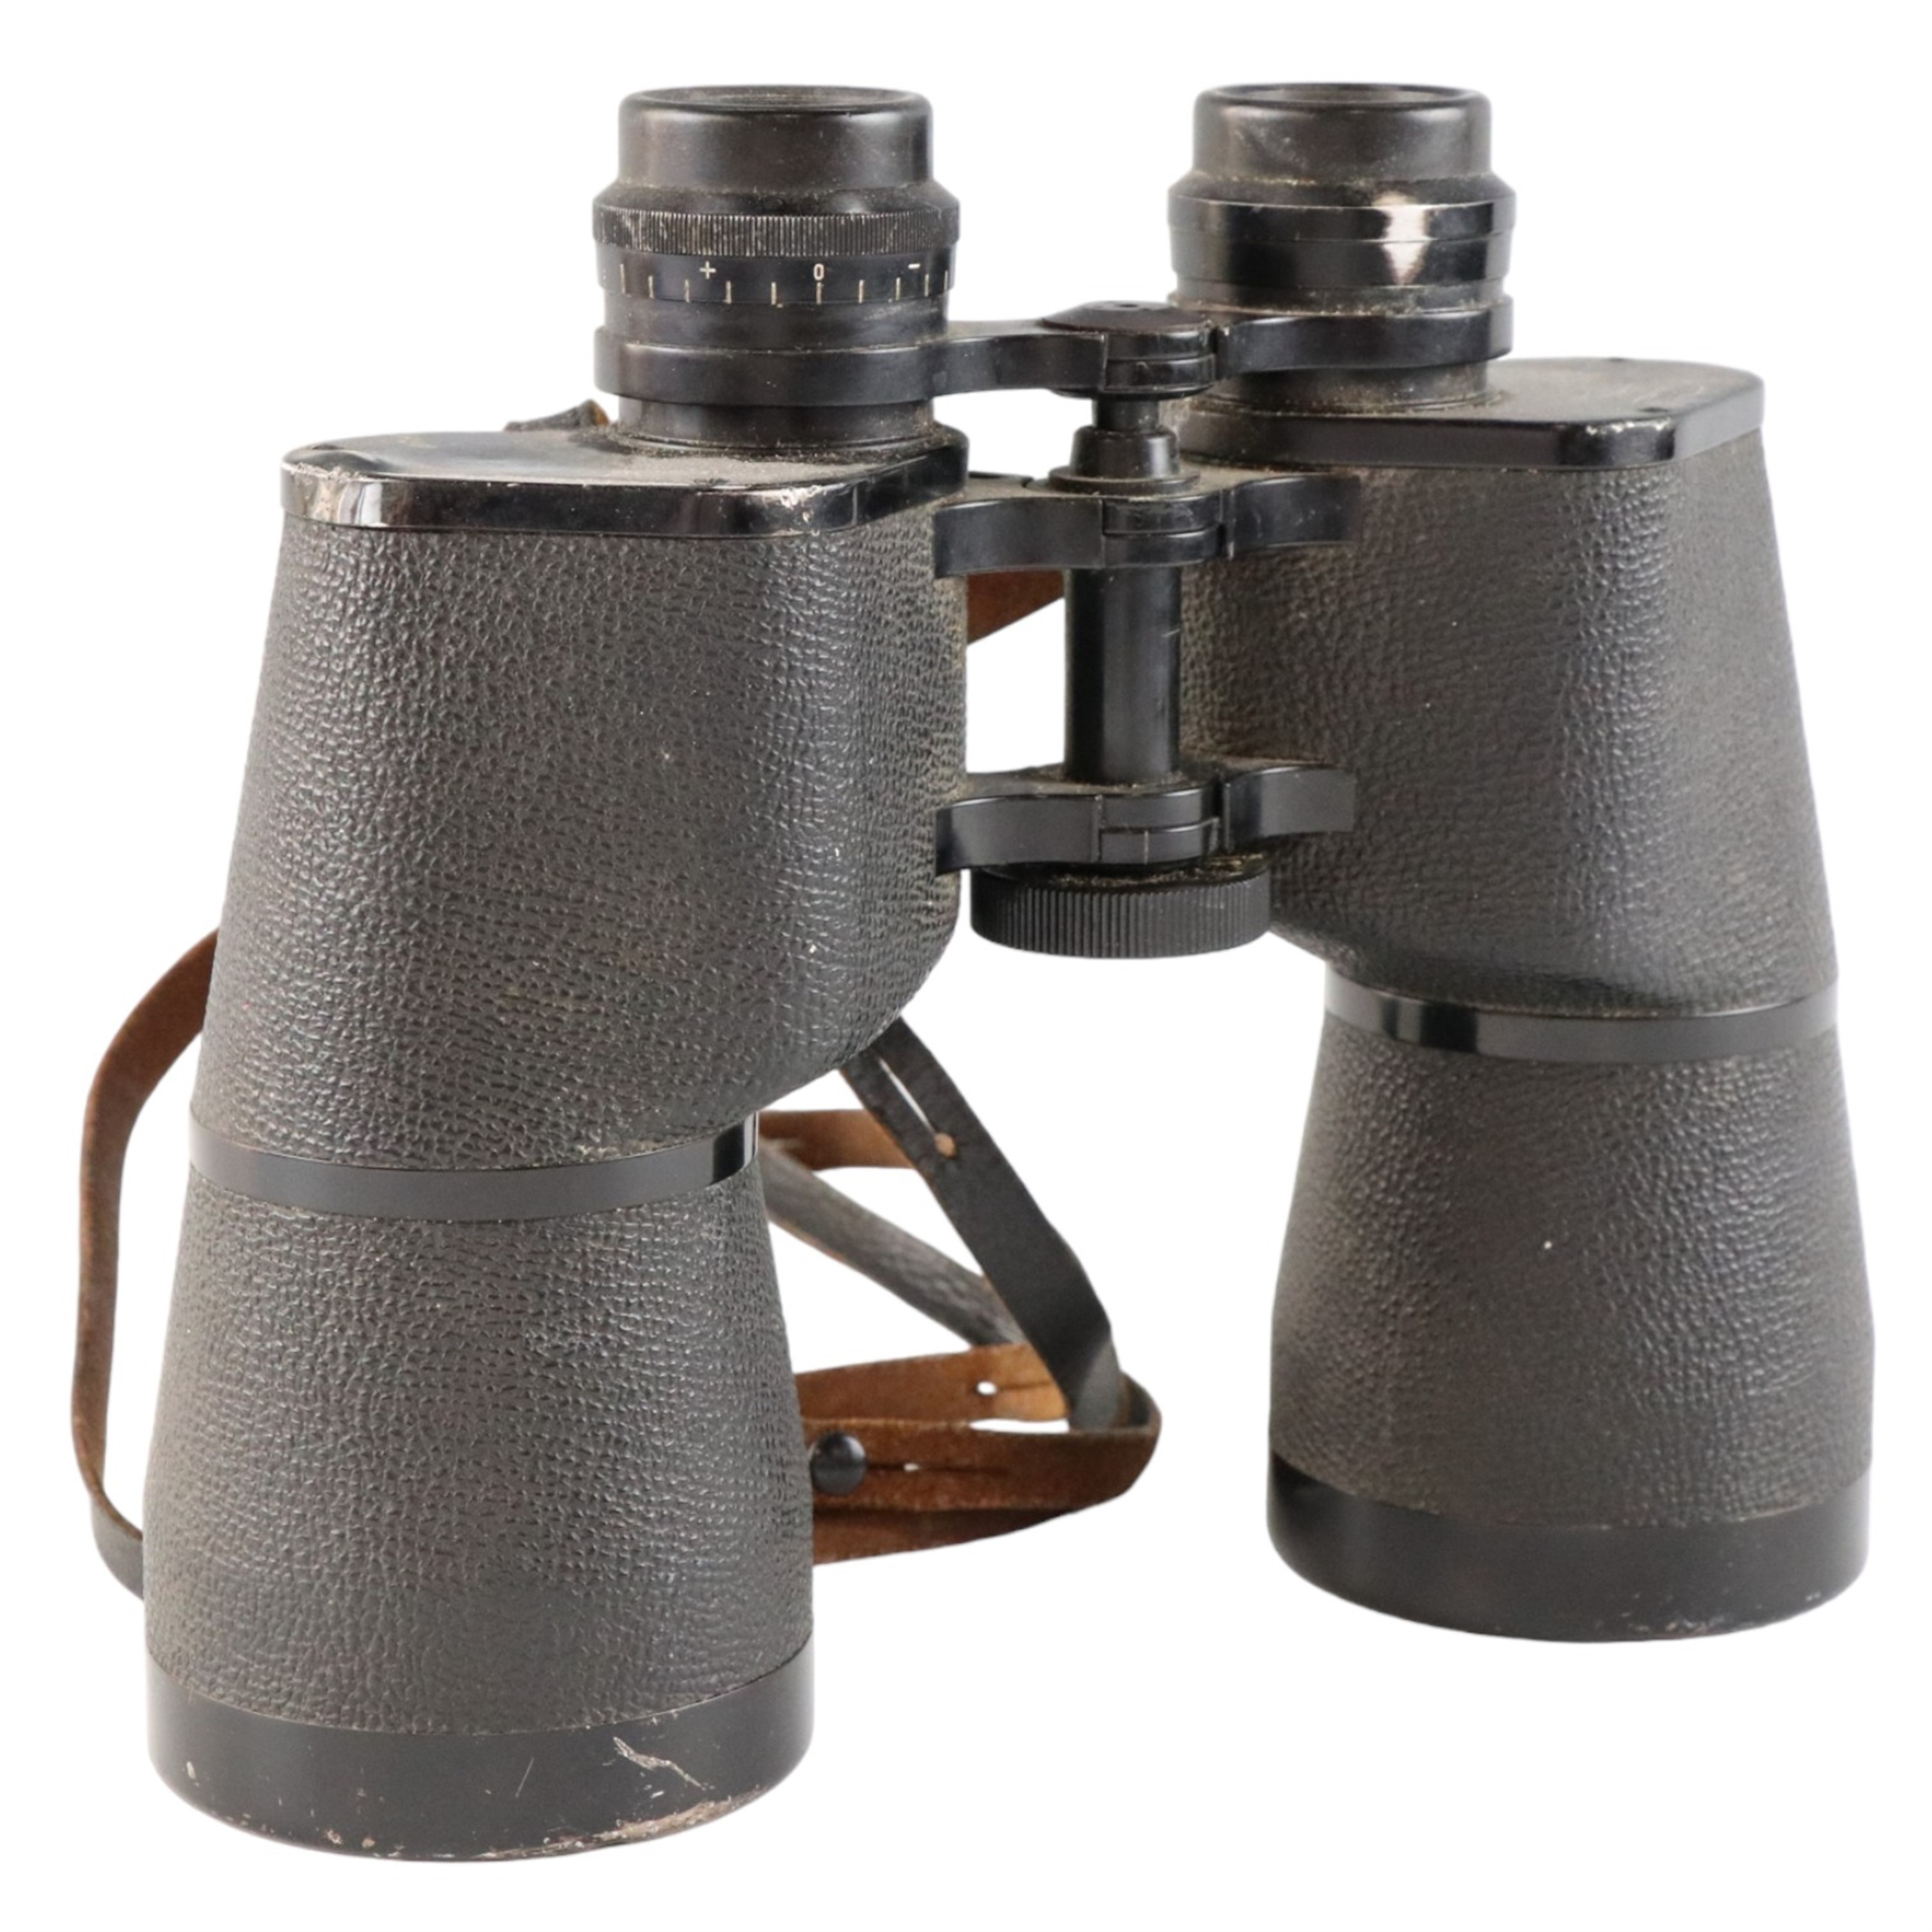 A pair of Carl Zeiss 15x60 binoculars